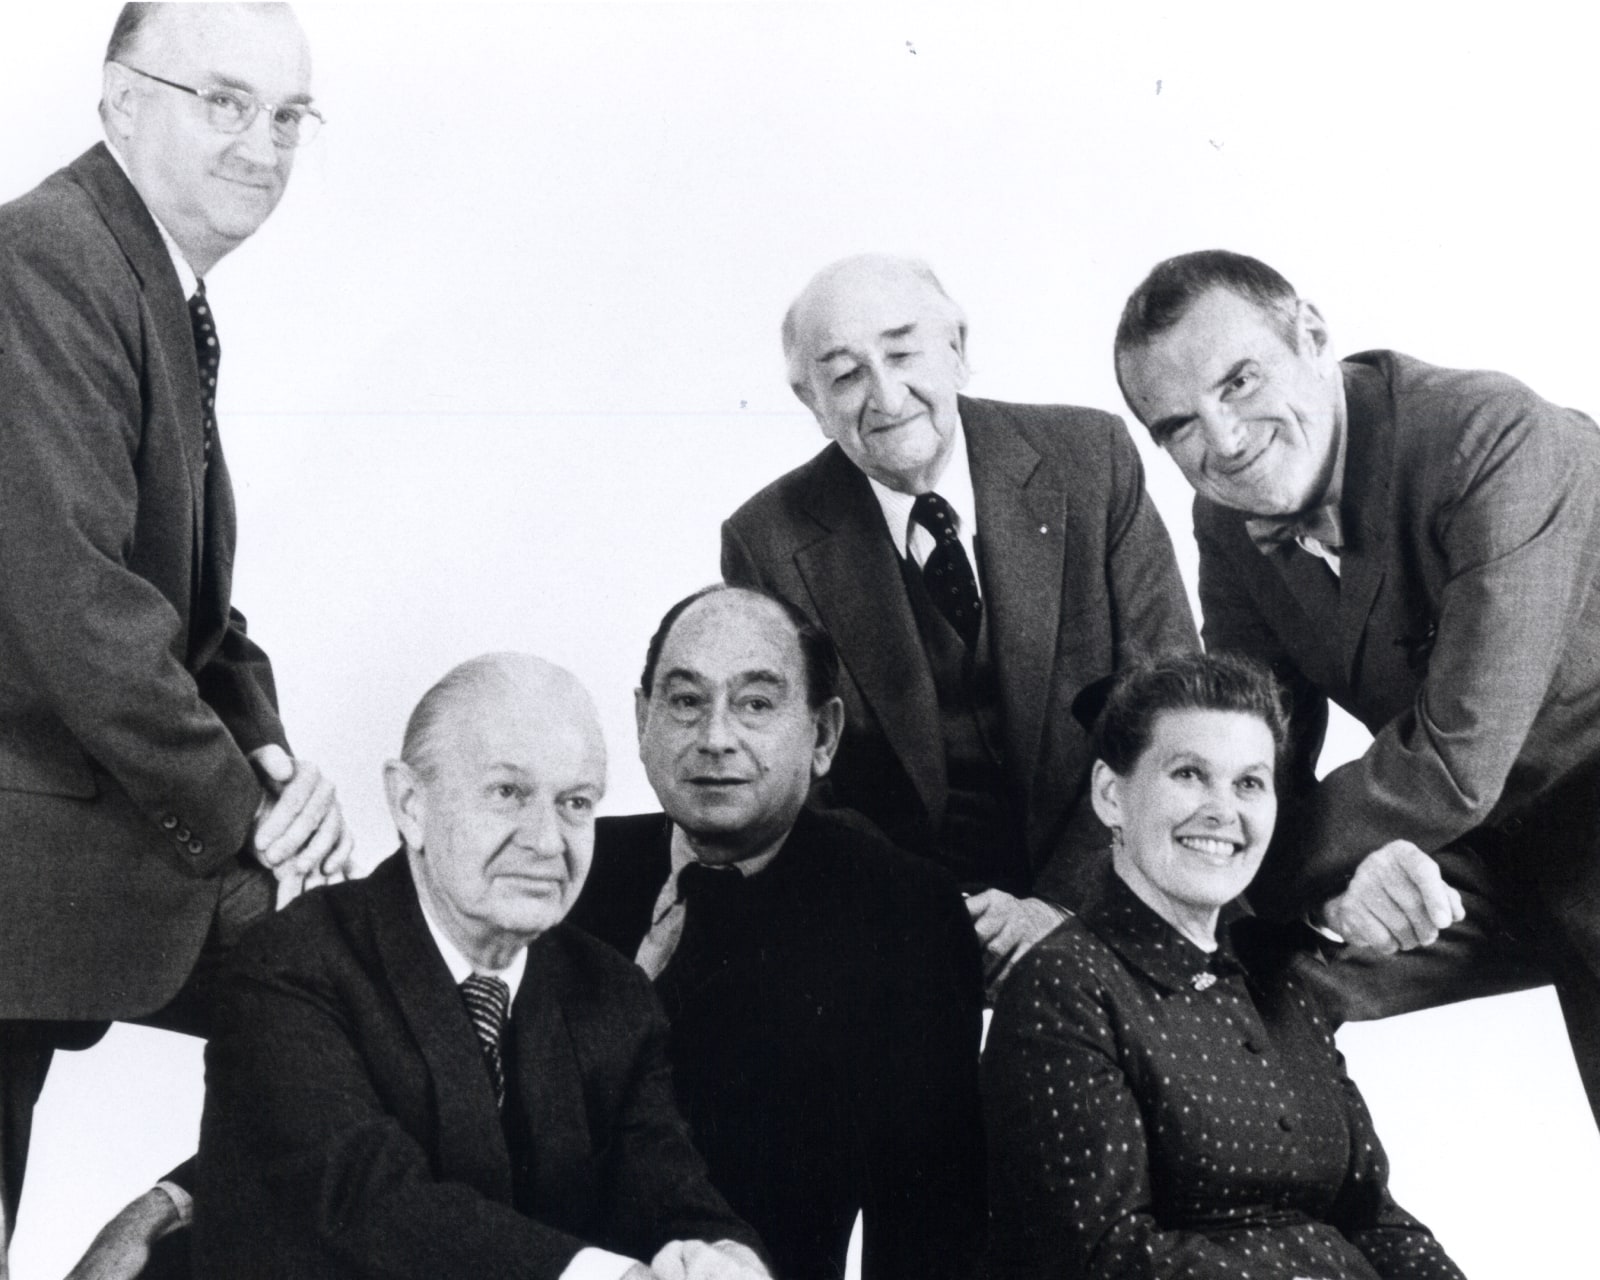 Oprichter D.J. De Pree, design director George Nelson en designers Robert Propst, Alexander Girard en Ray en Charles Eames.